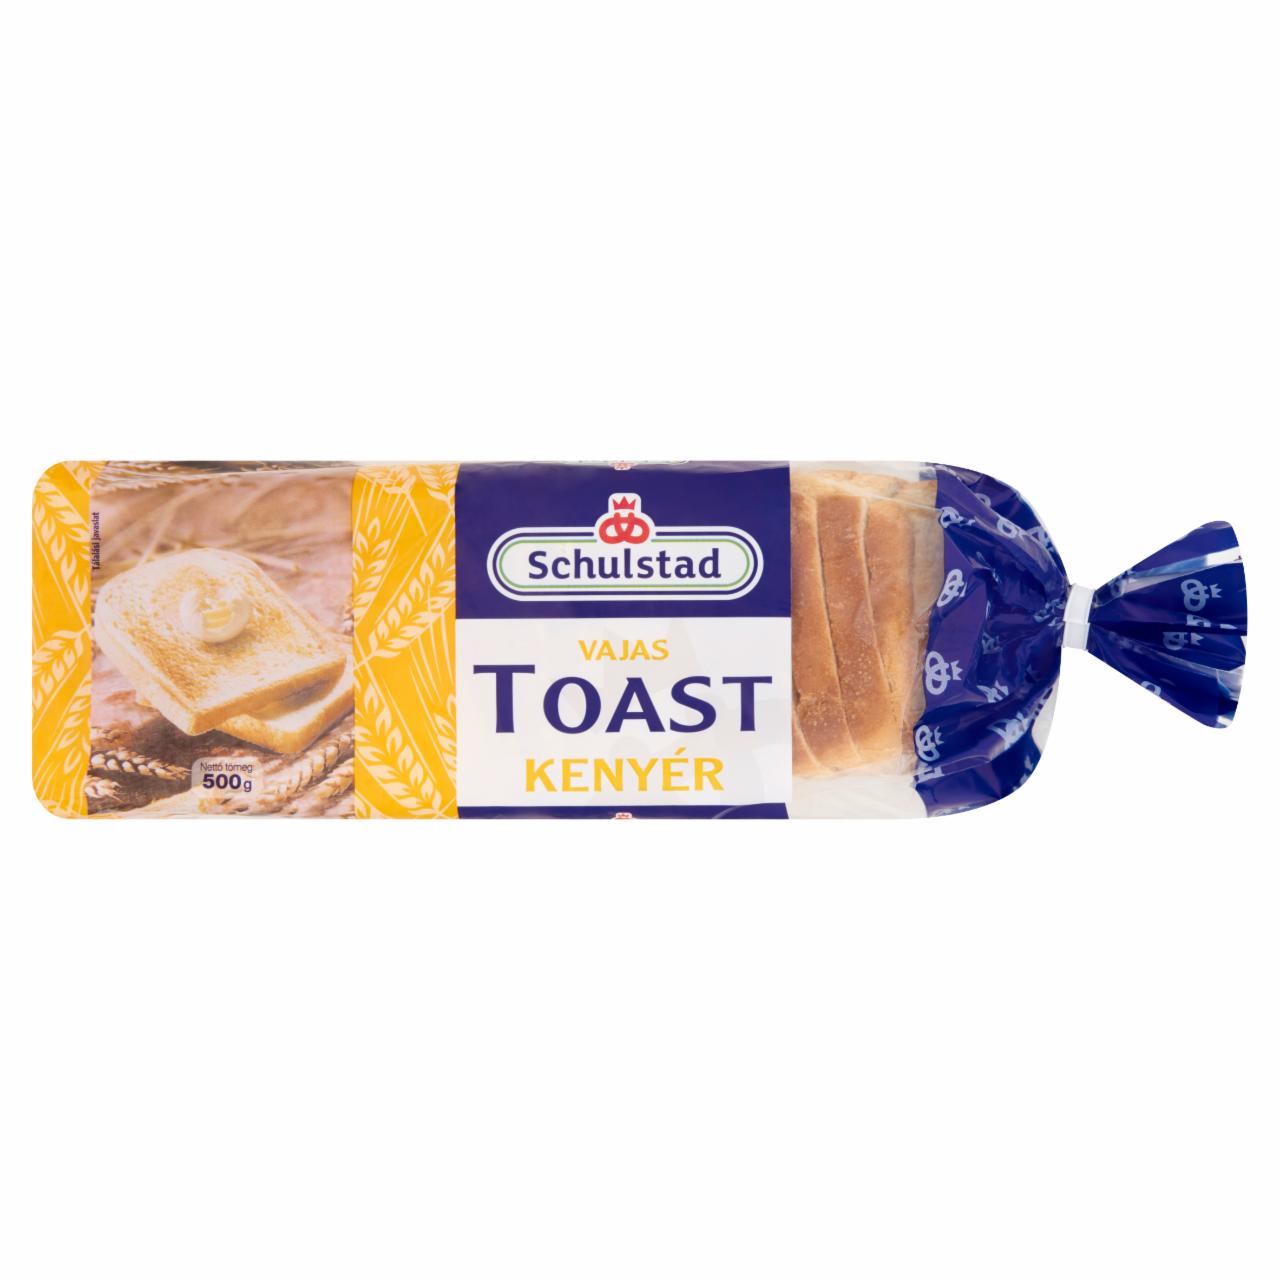 Képek - Schulstad vajas toast kenyér 500 g